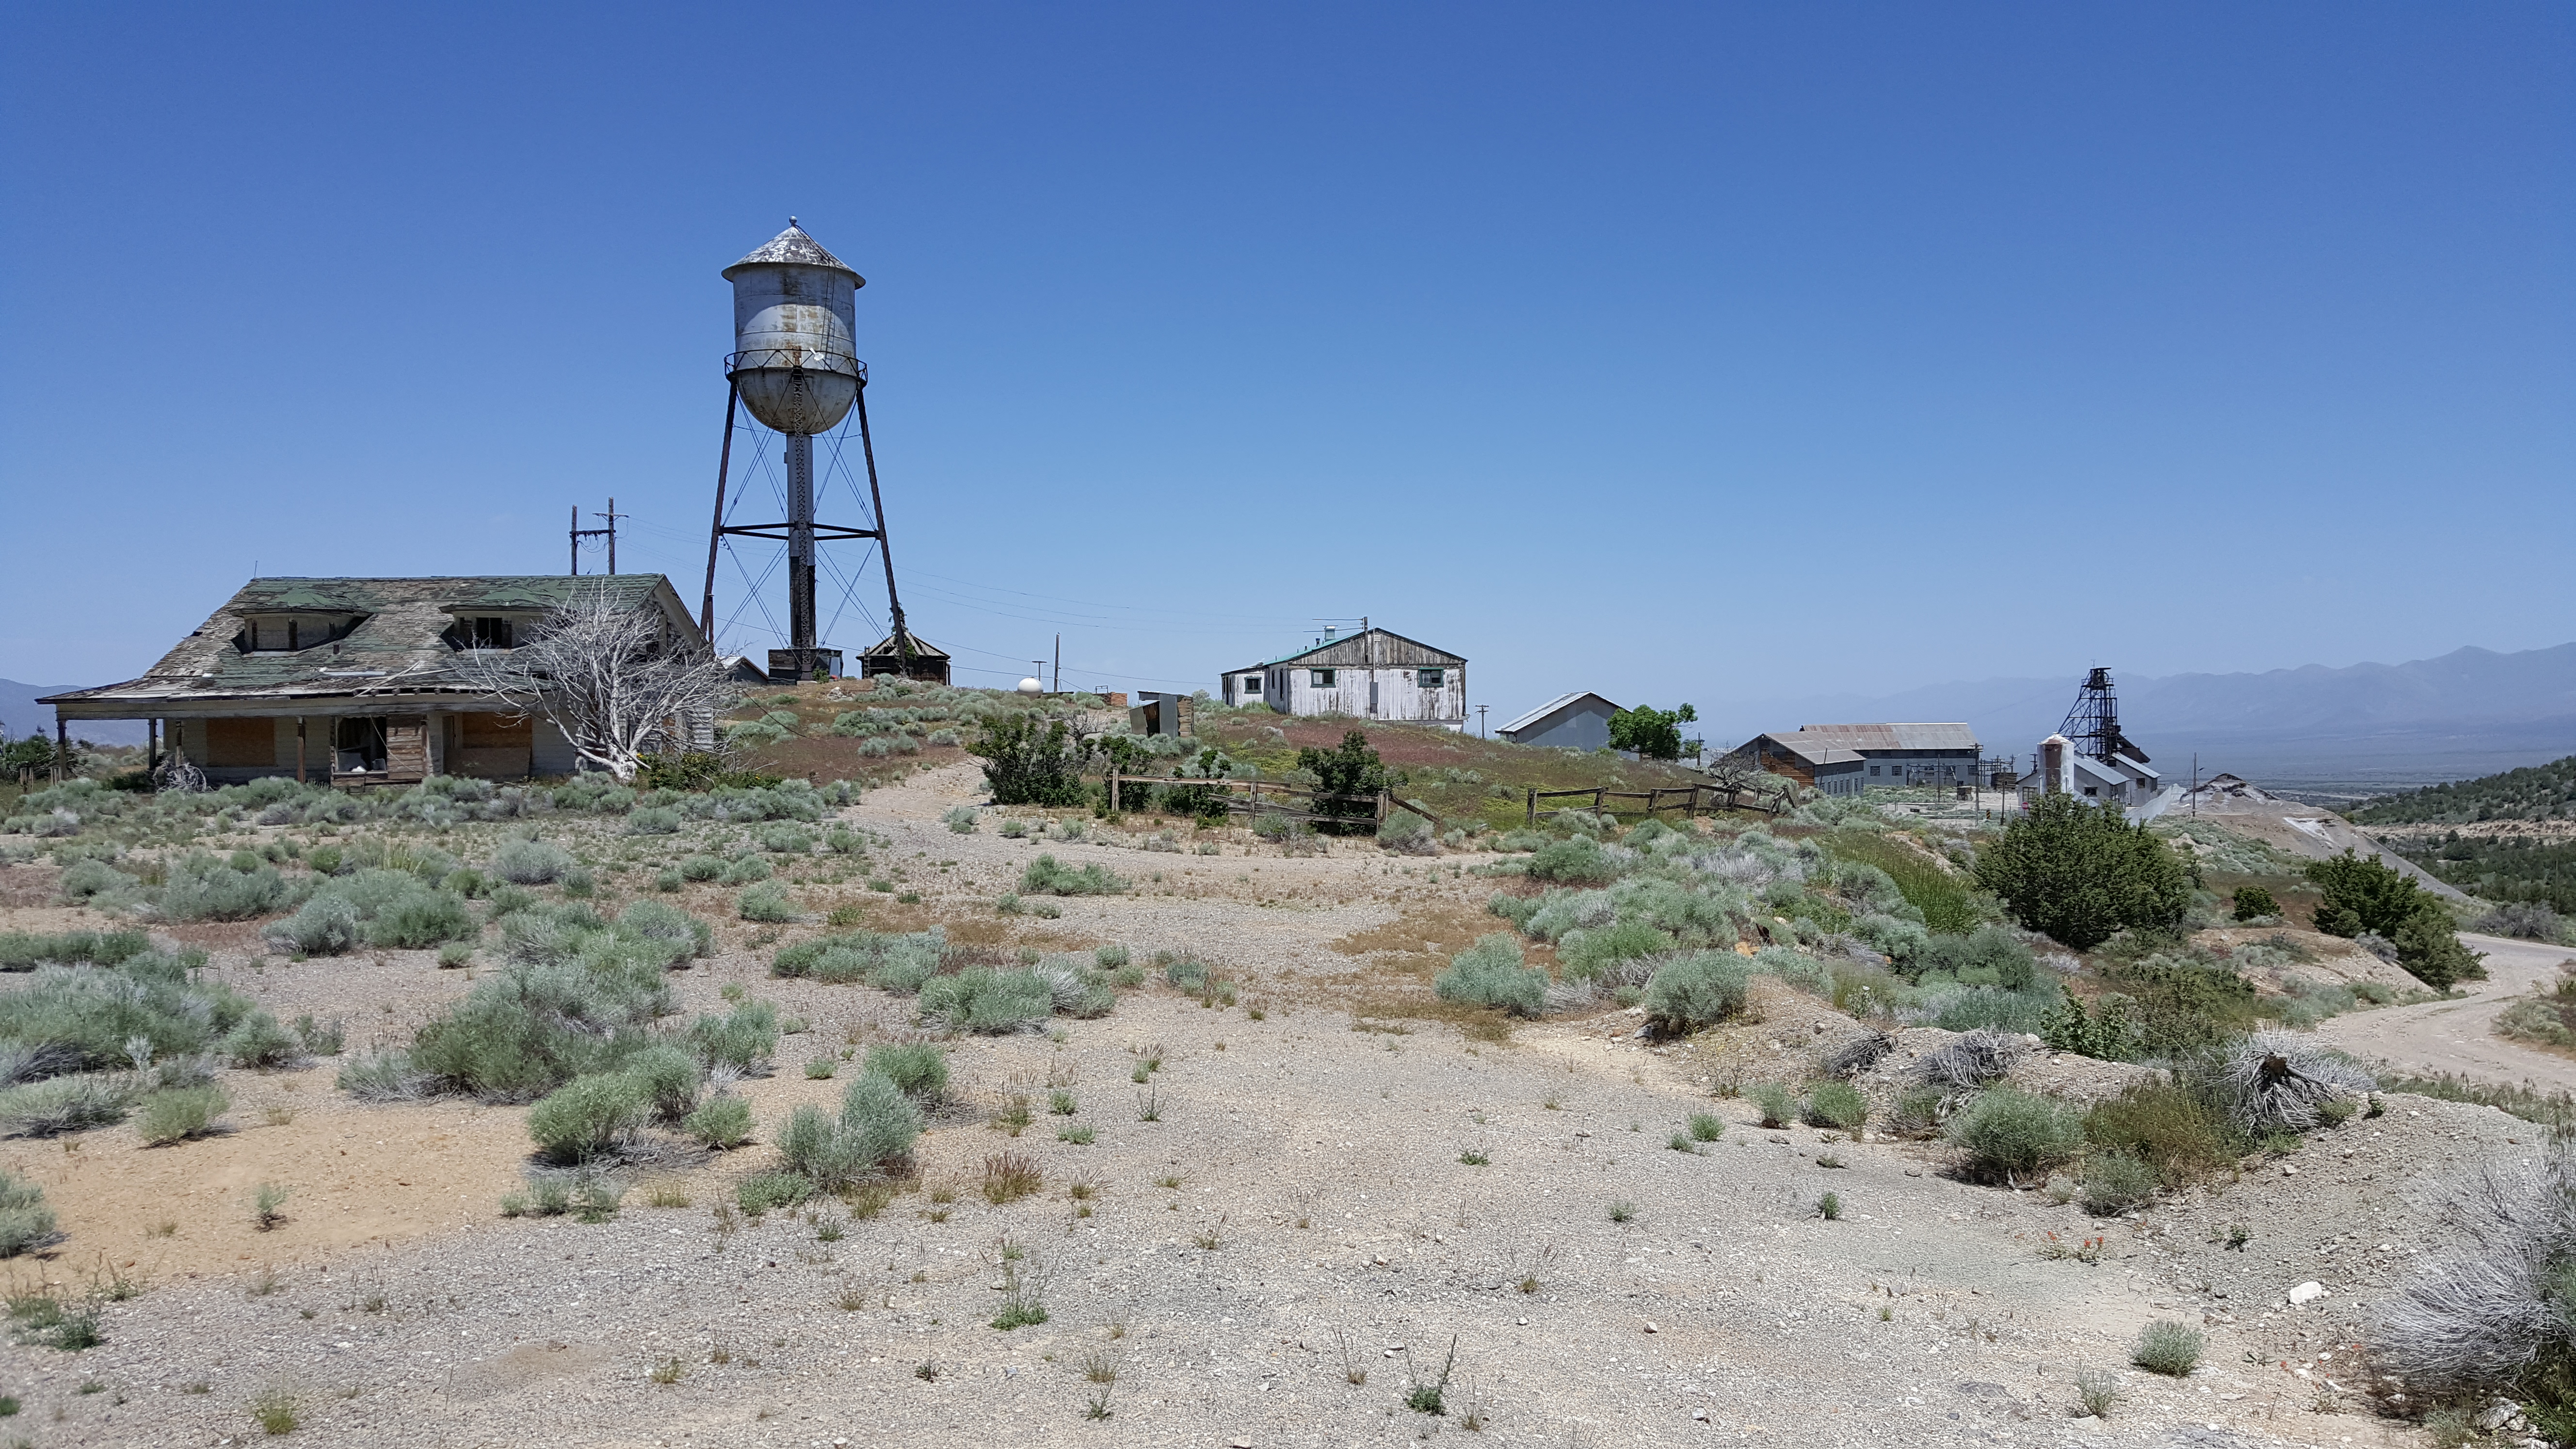 Abandoned mine at Ruby, Nevada